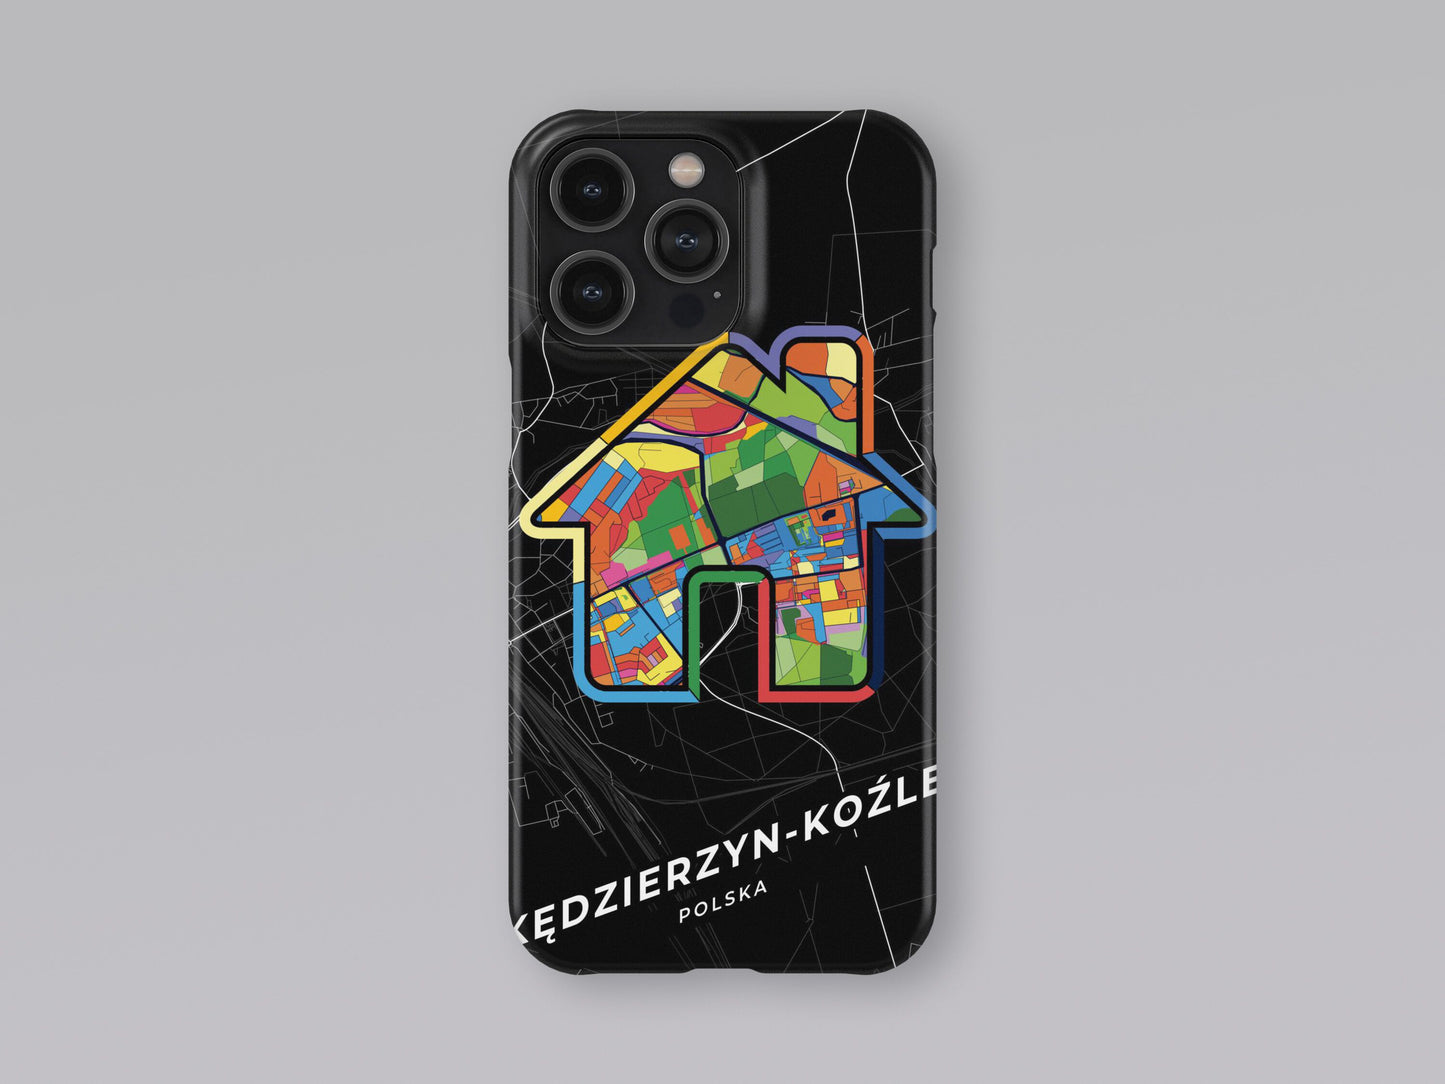 Kędzierzyn-Koźle Poland slim phone case with colorful icon. Birthday, wedding or housewarming gift. Couple match cases. 3